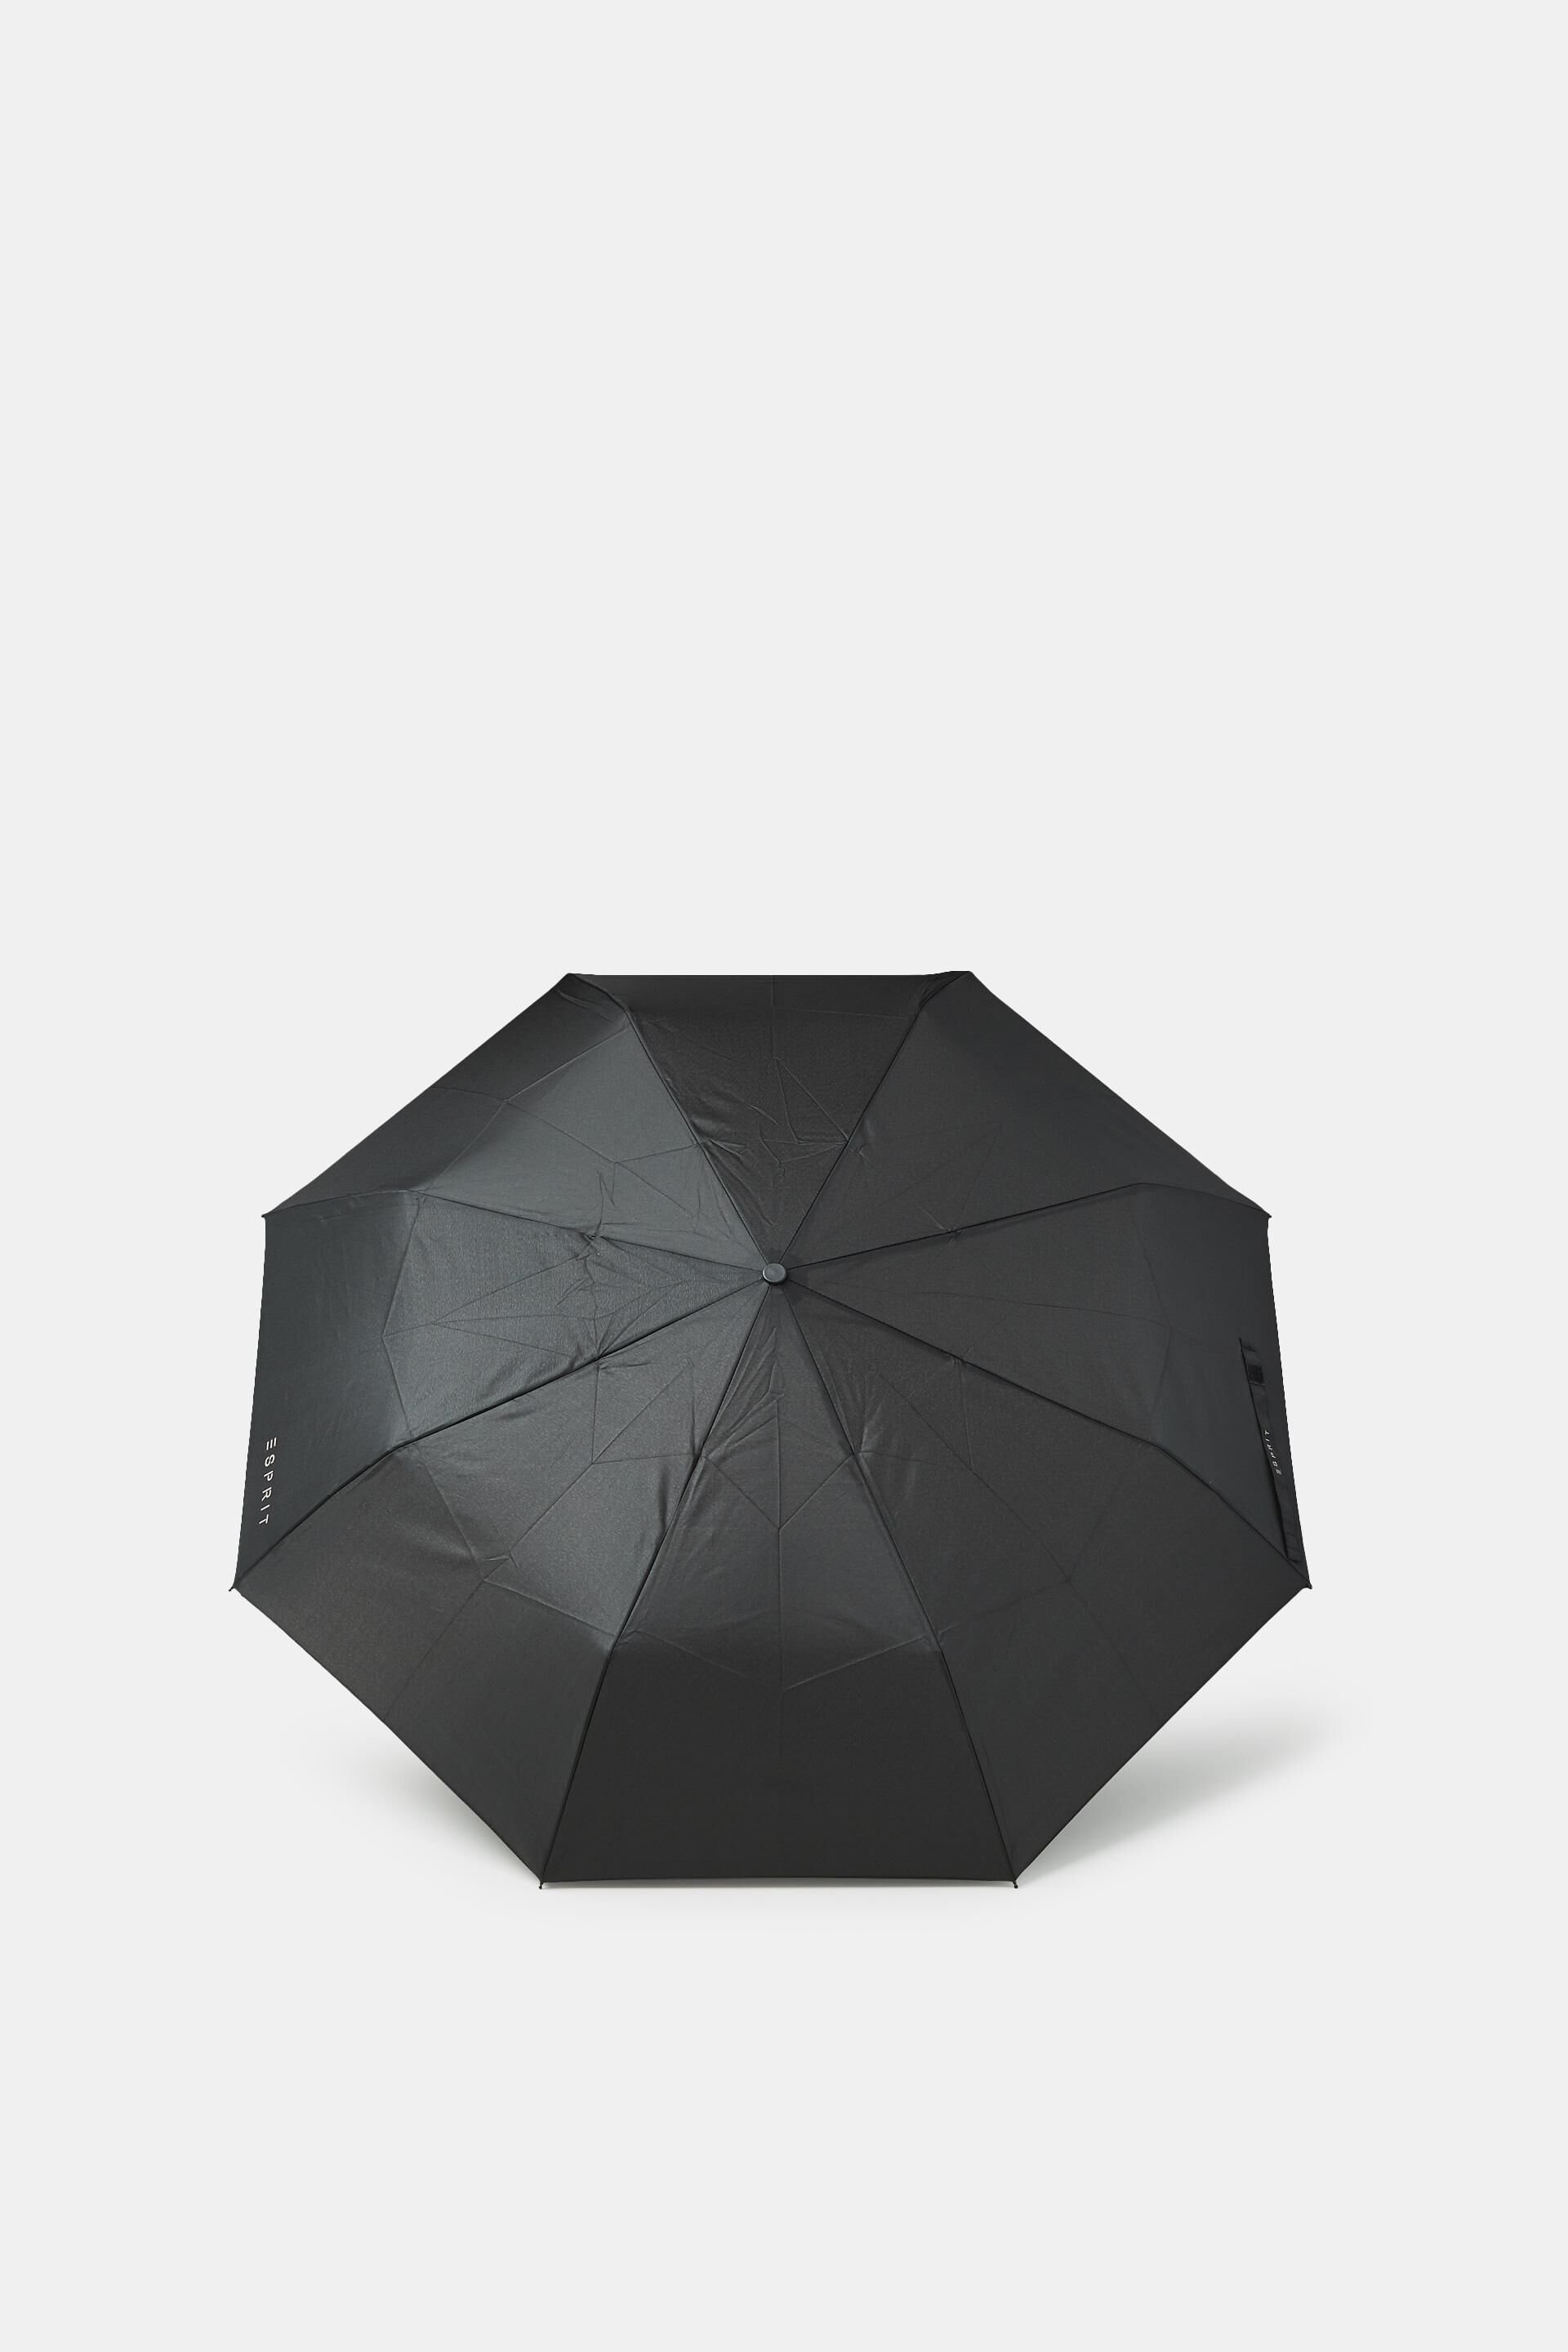 Esprit Online Store Mini pocket umbrella with a round handle